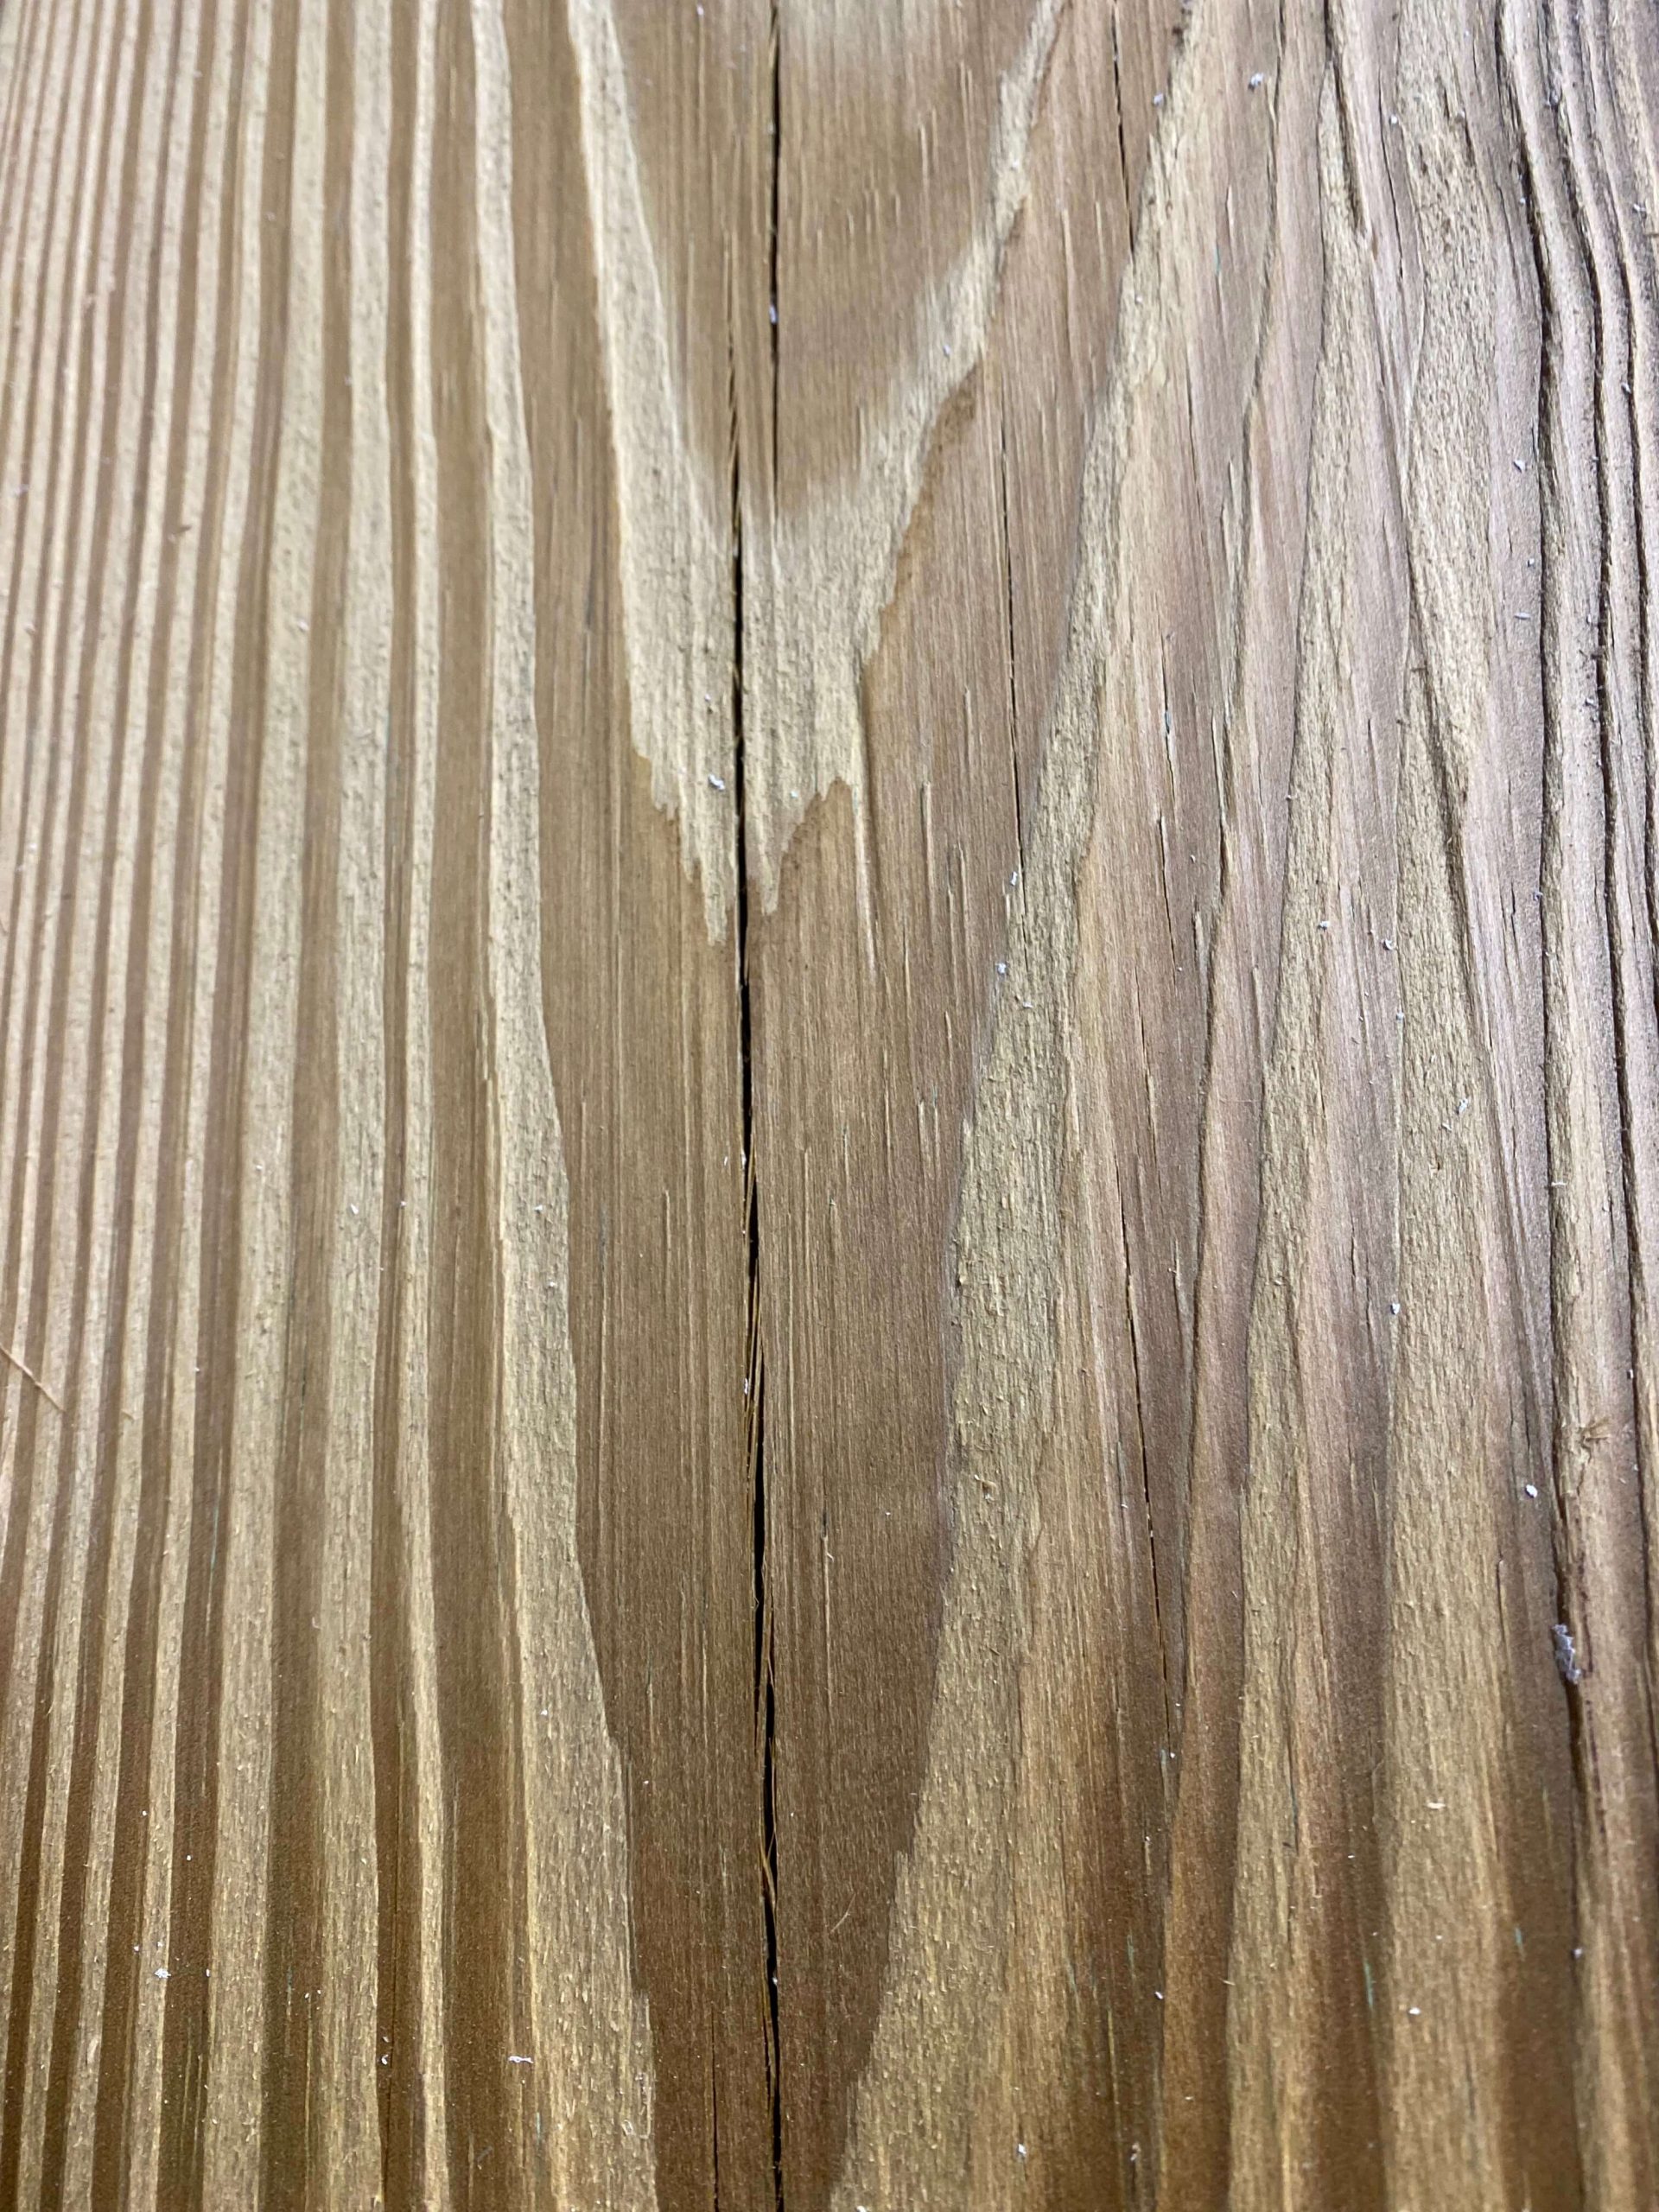 wood checking and splitting